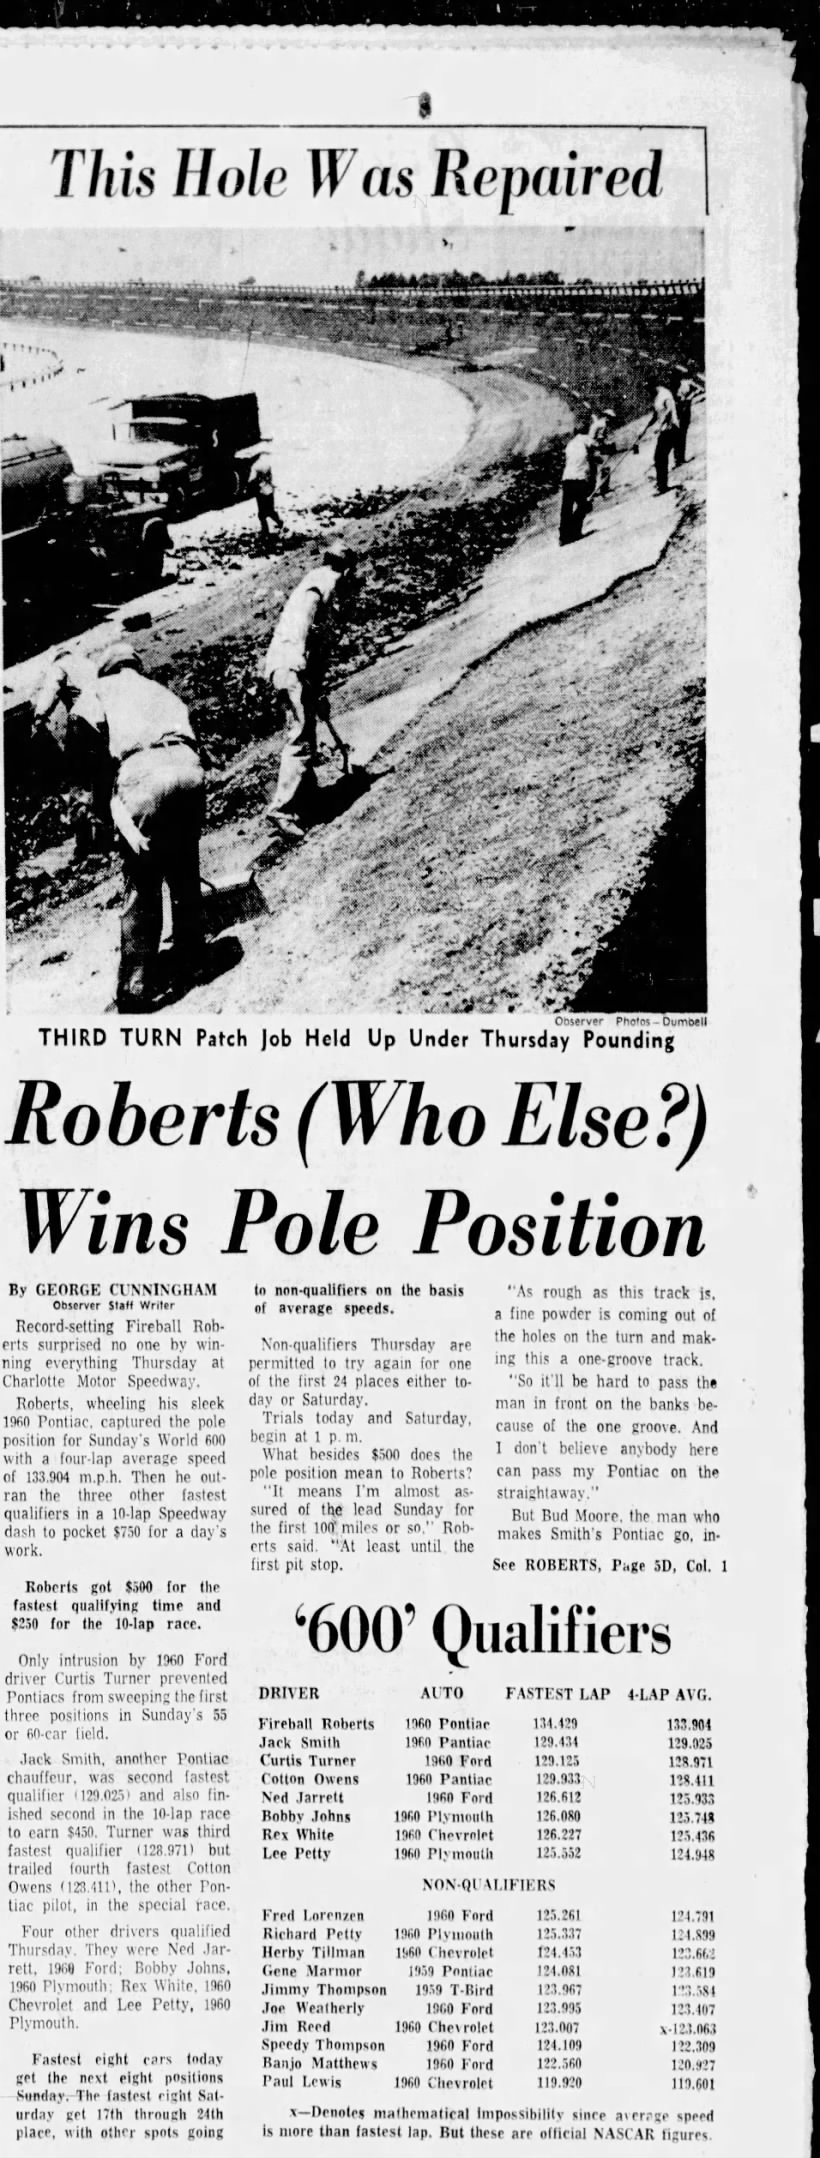 Roberts (Who Else?) Wins Pole Position (Part 1)